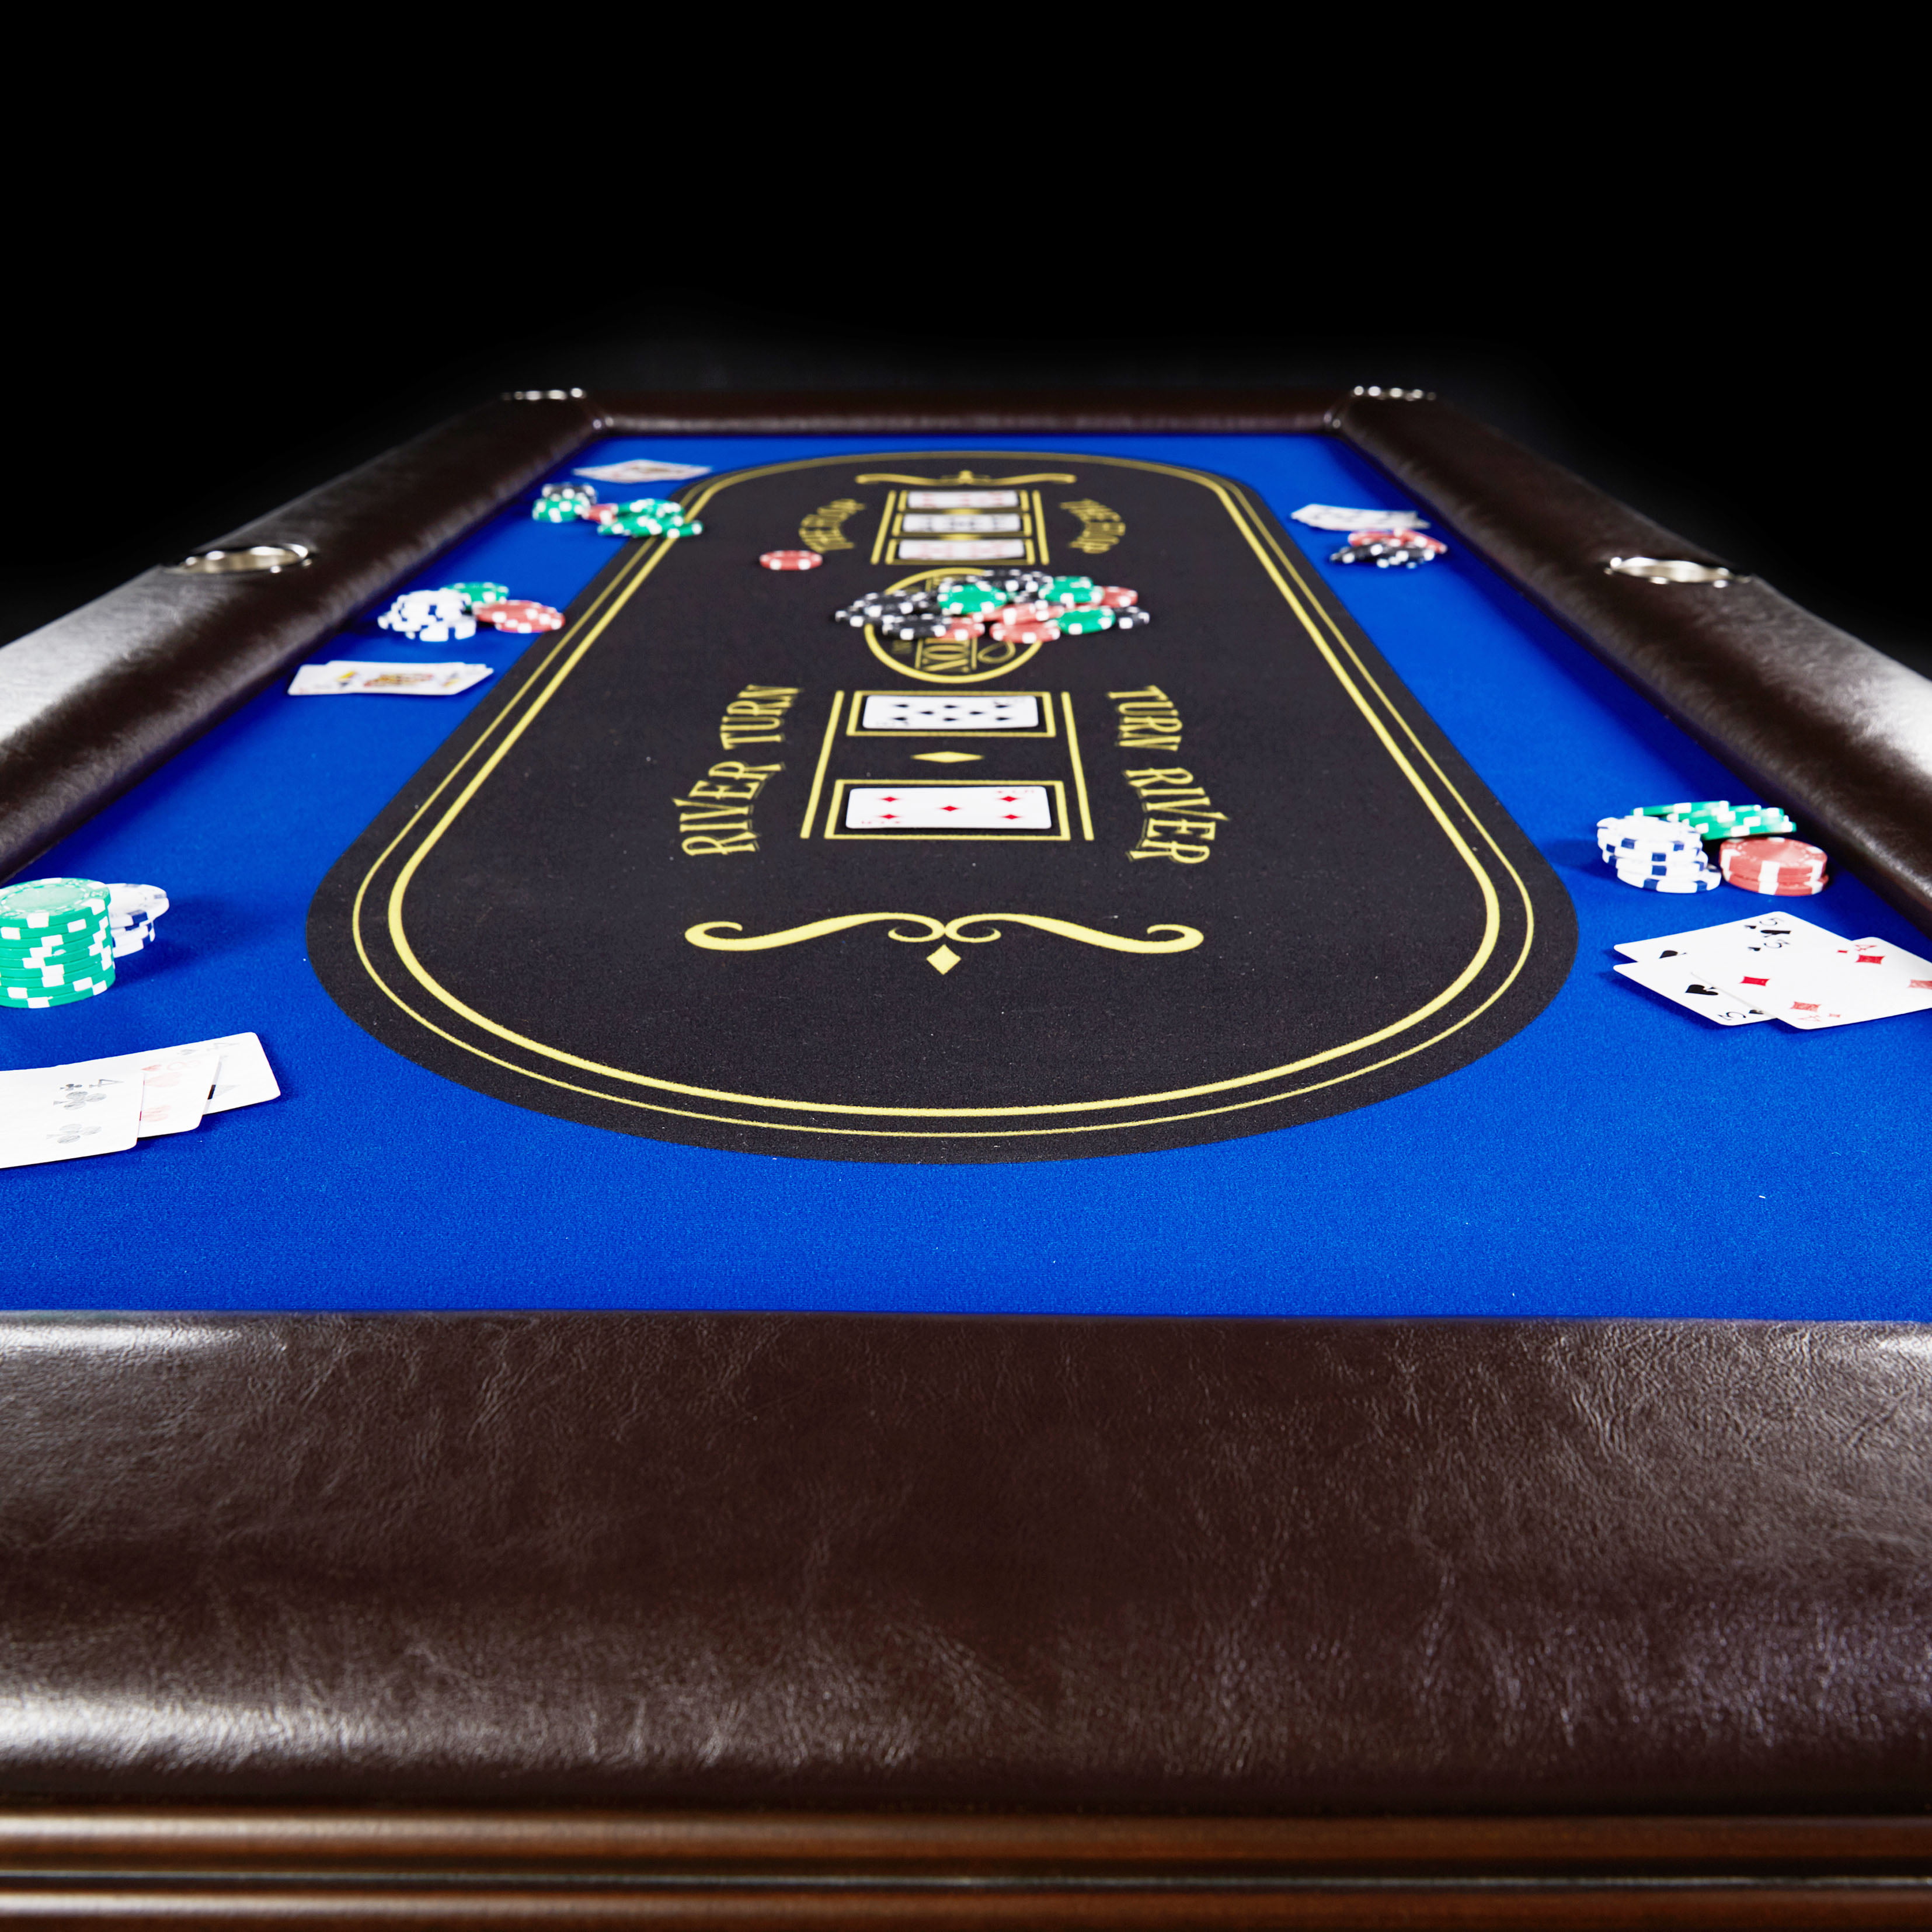 Barrington poker table walmart